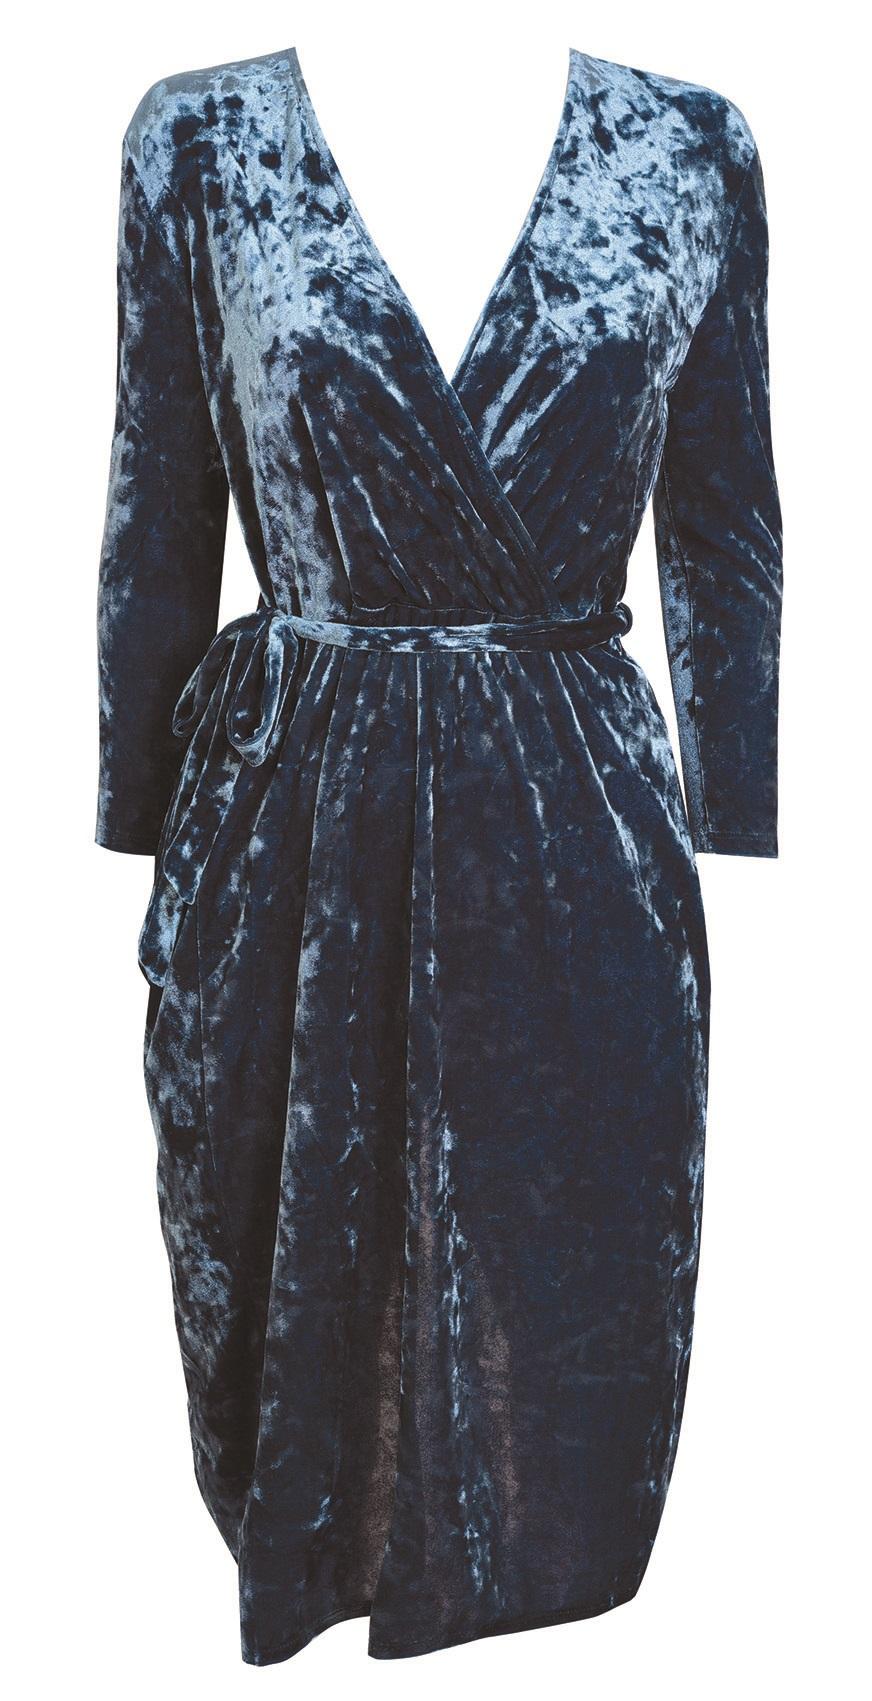 Topshop, Velvet Wrap Dress, £36